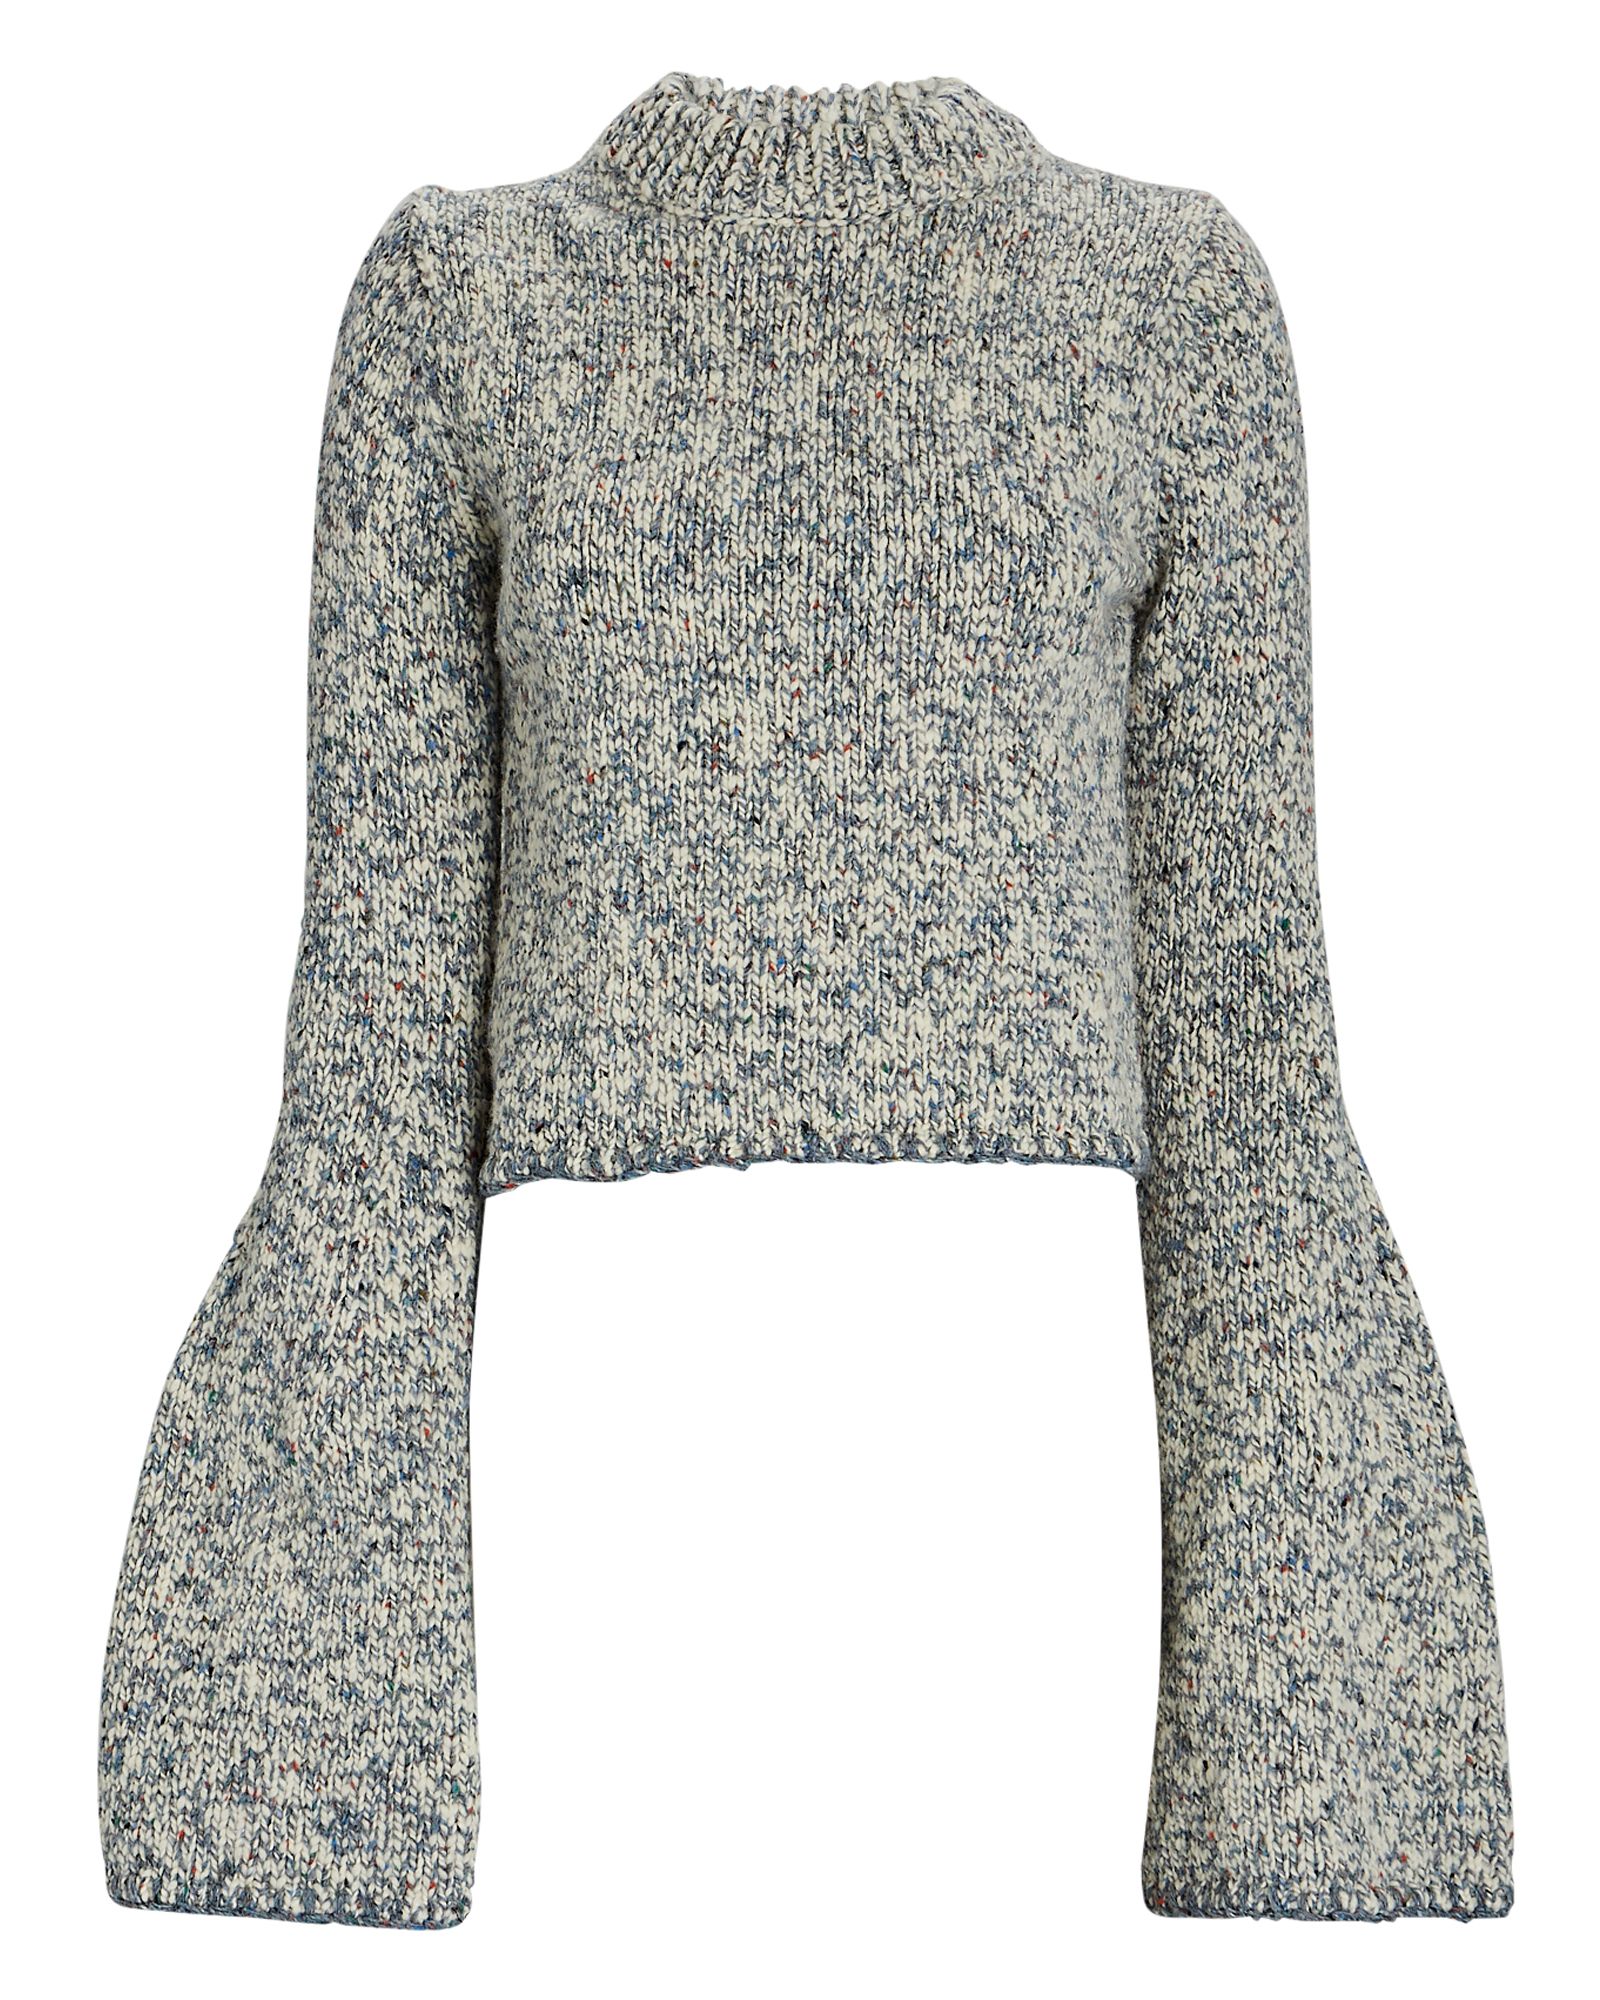 Luisa Marled Wool-Blend Sweater | INTERMIX